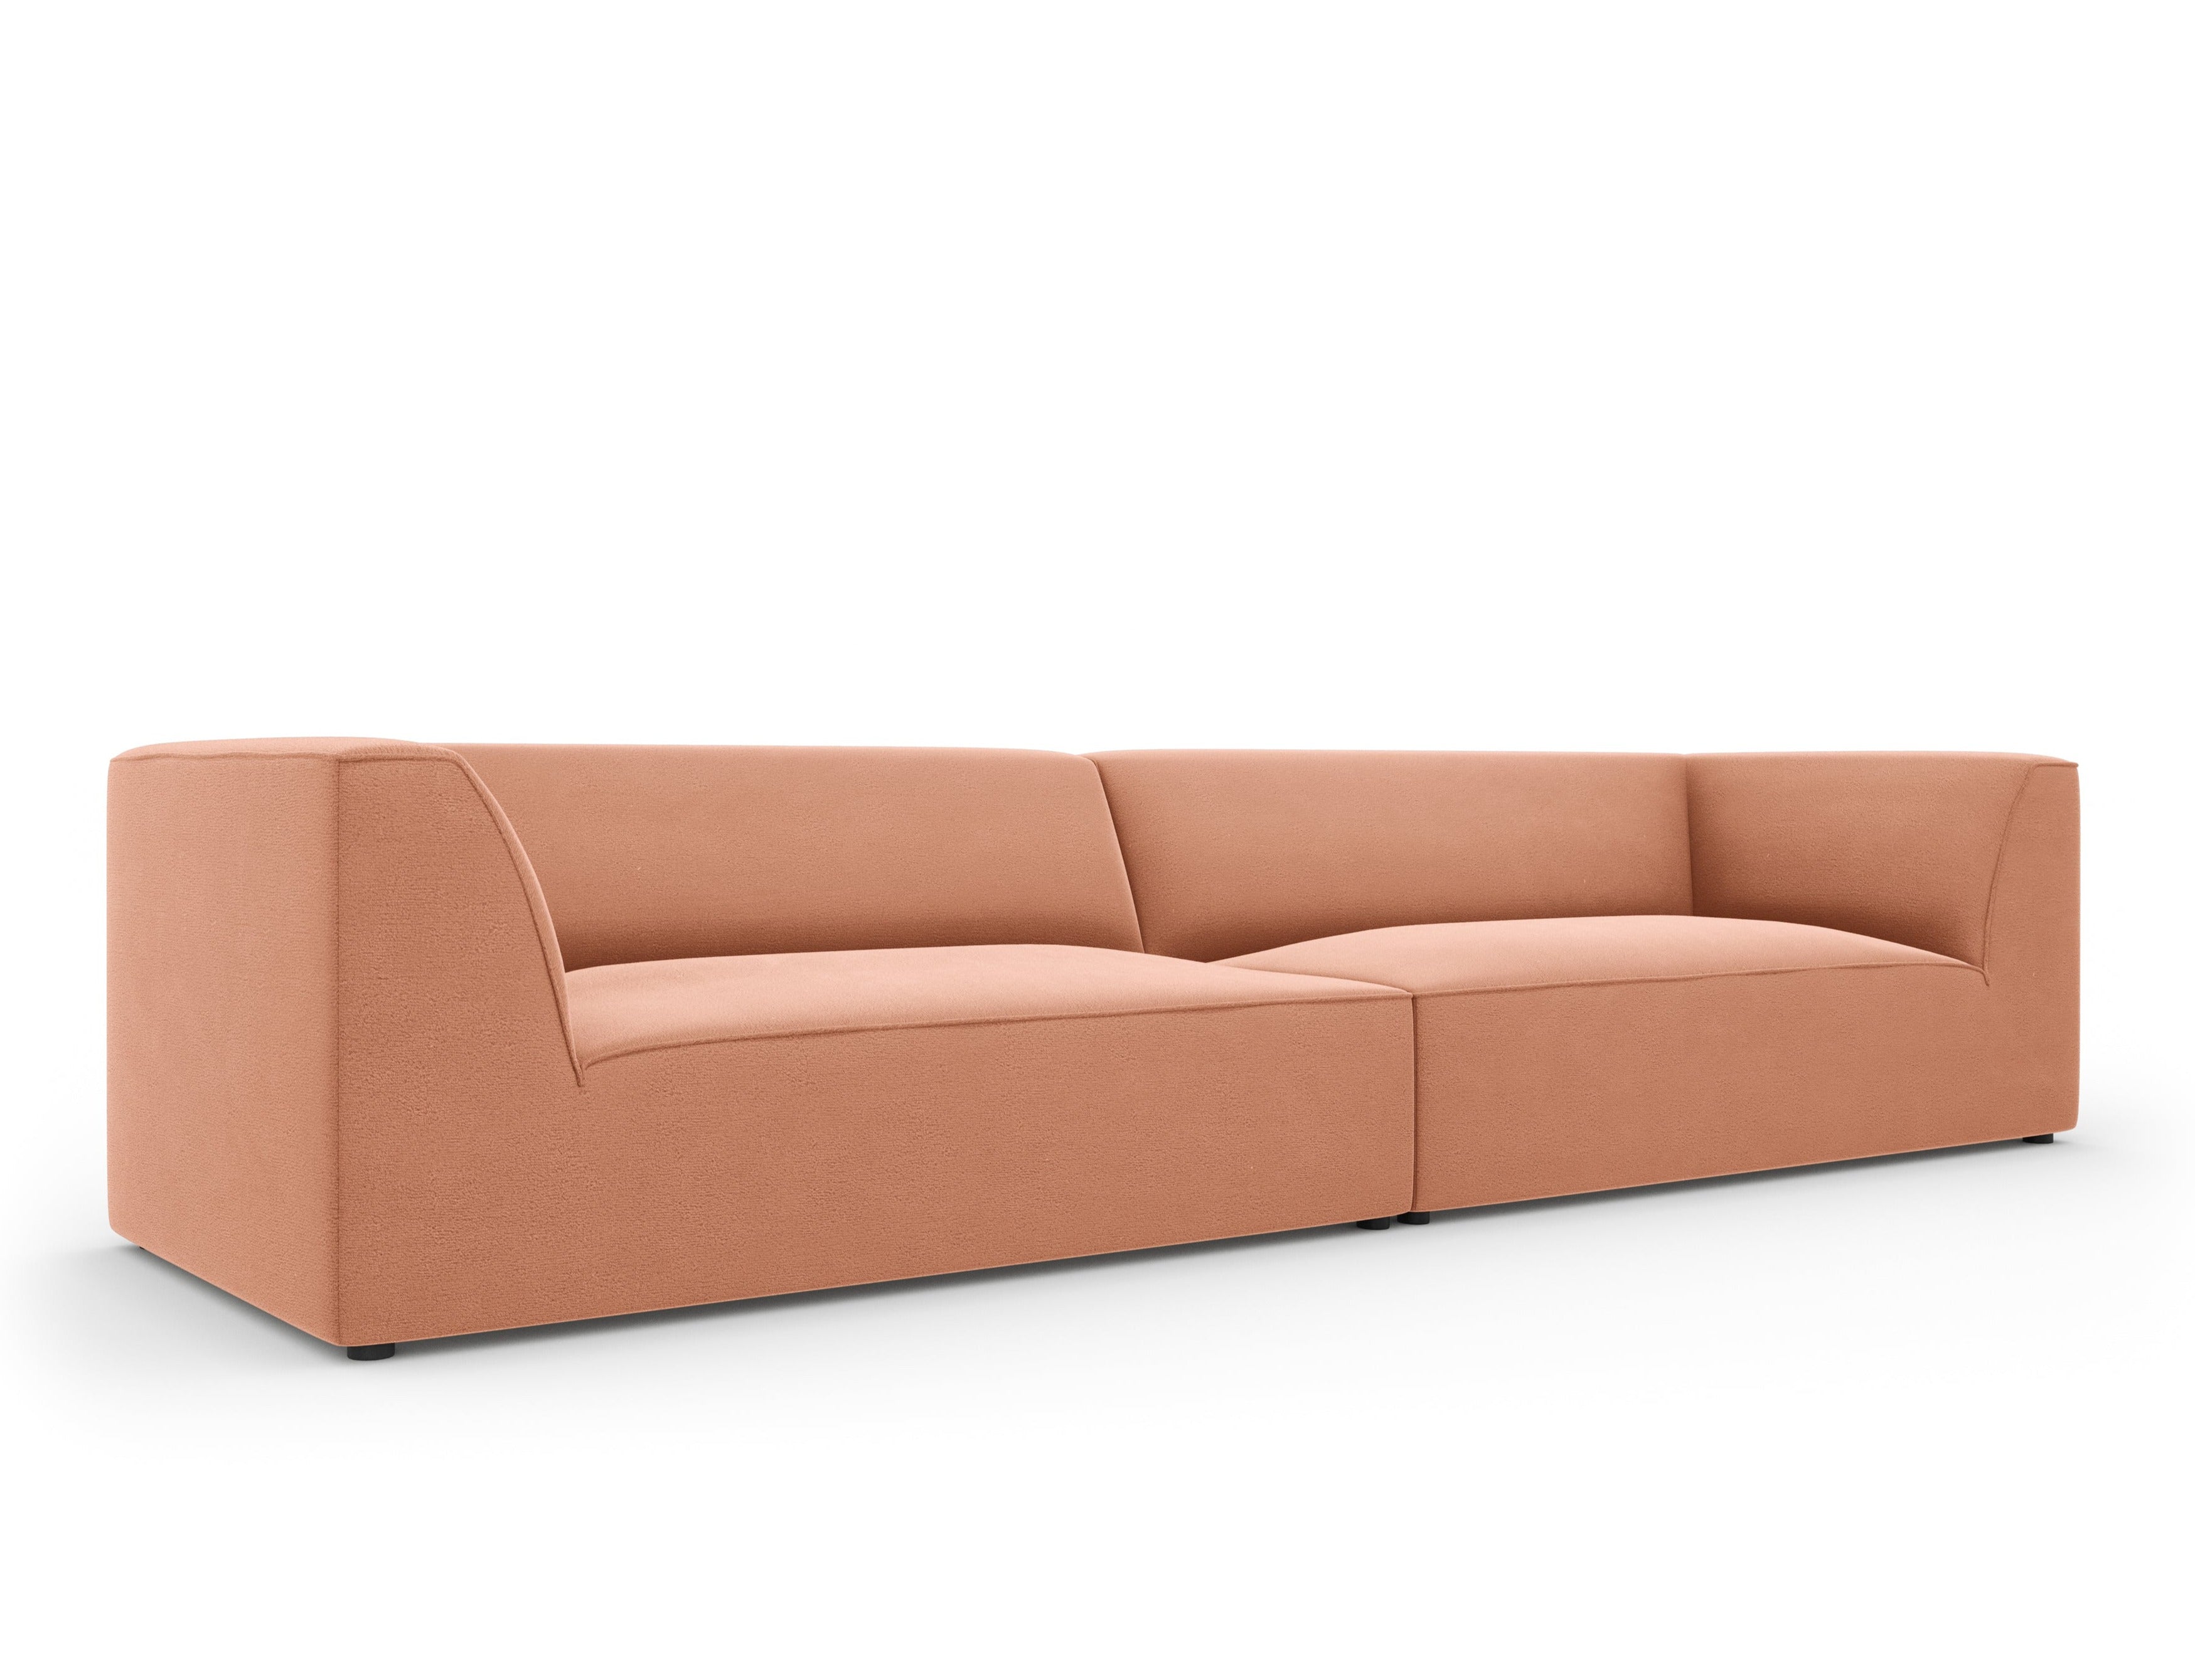 Salmon sofa with glossy